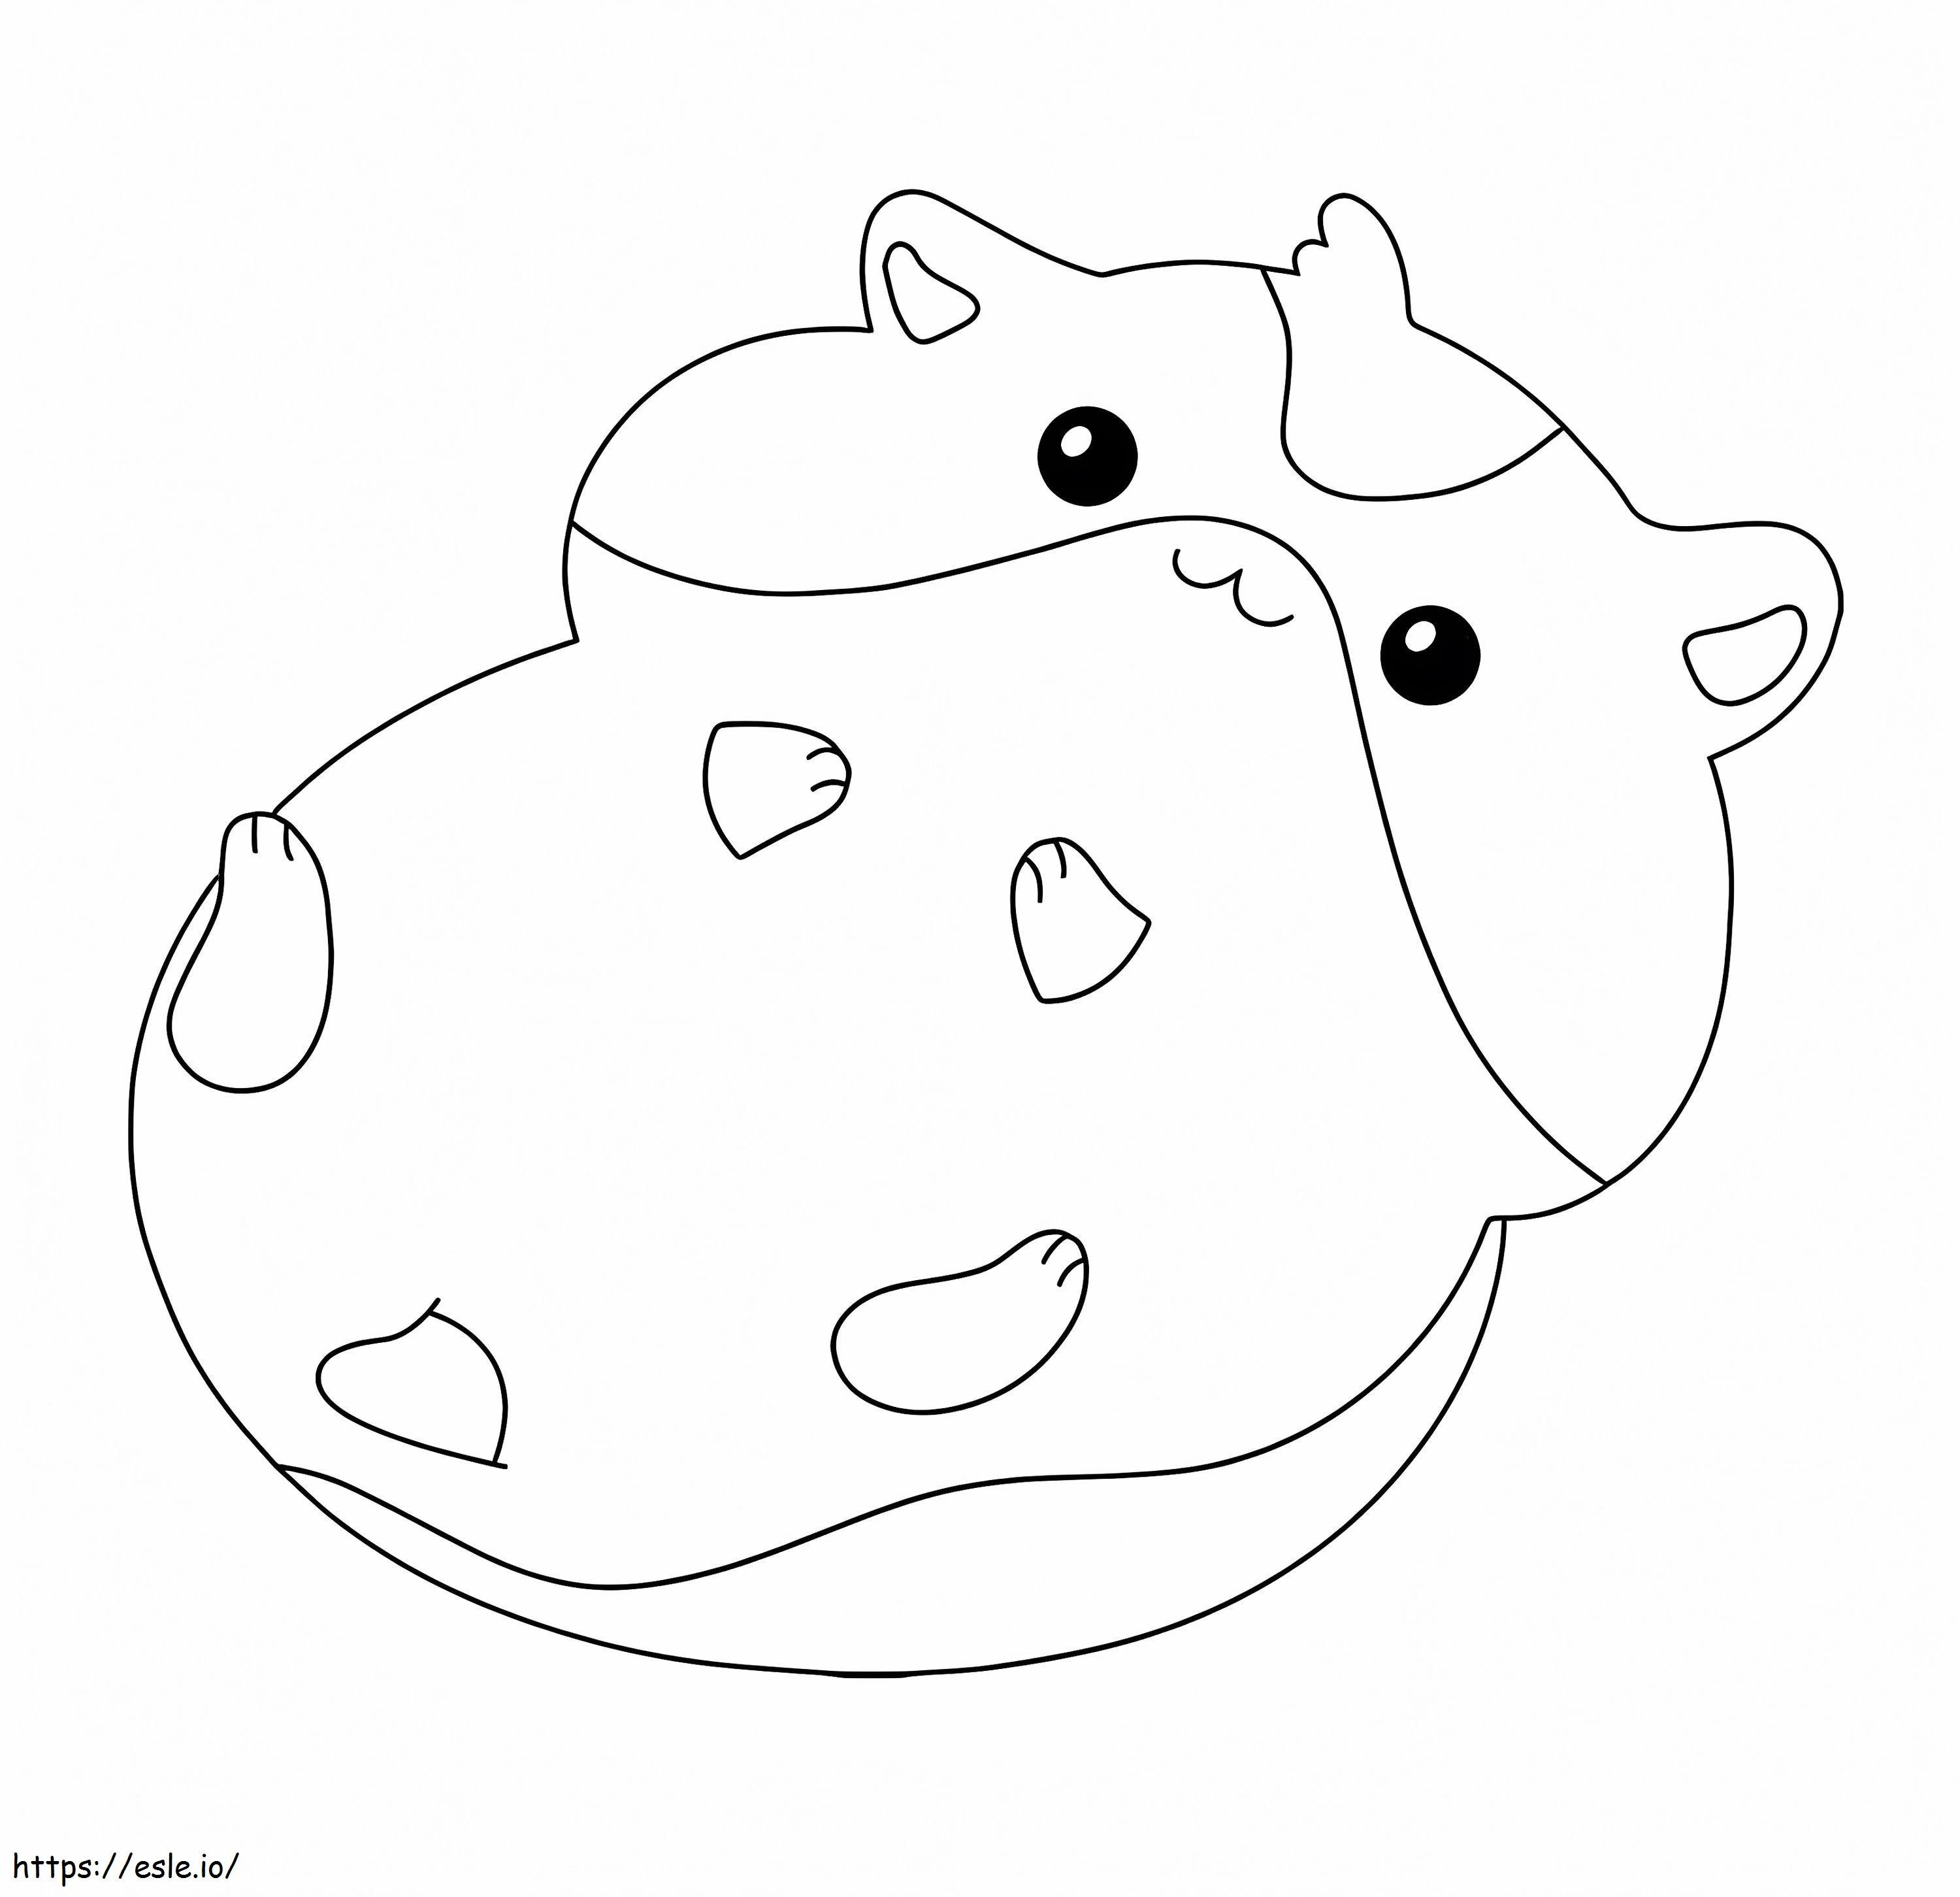 Coloriage Hamster facile à imprimer dessin